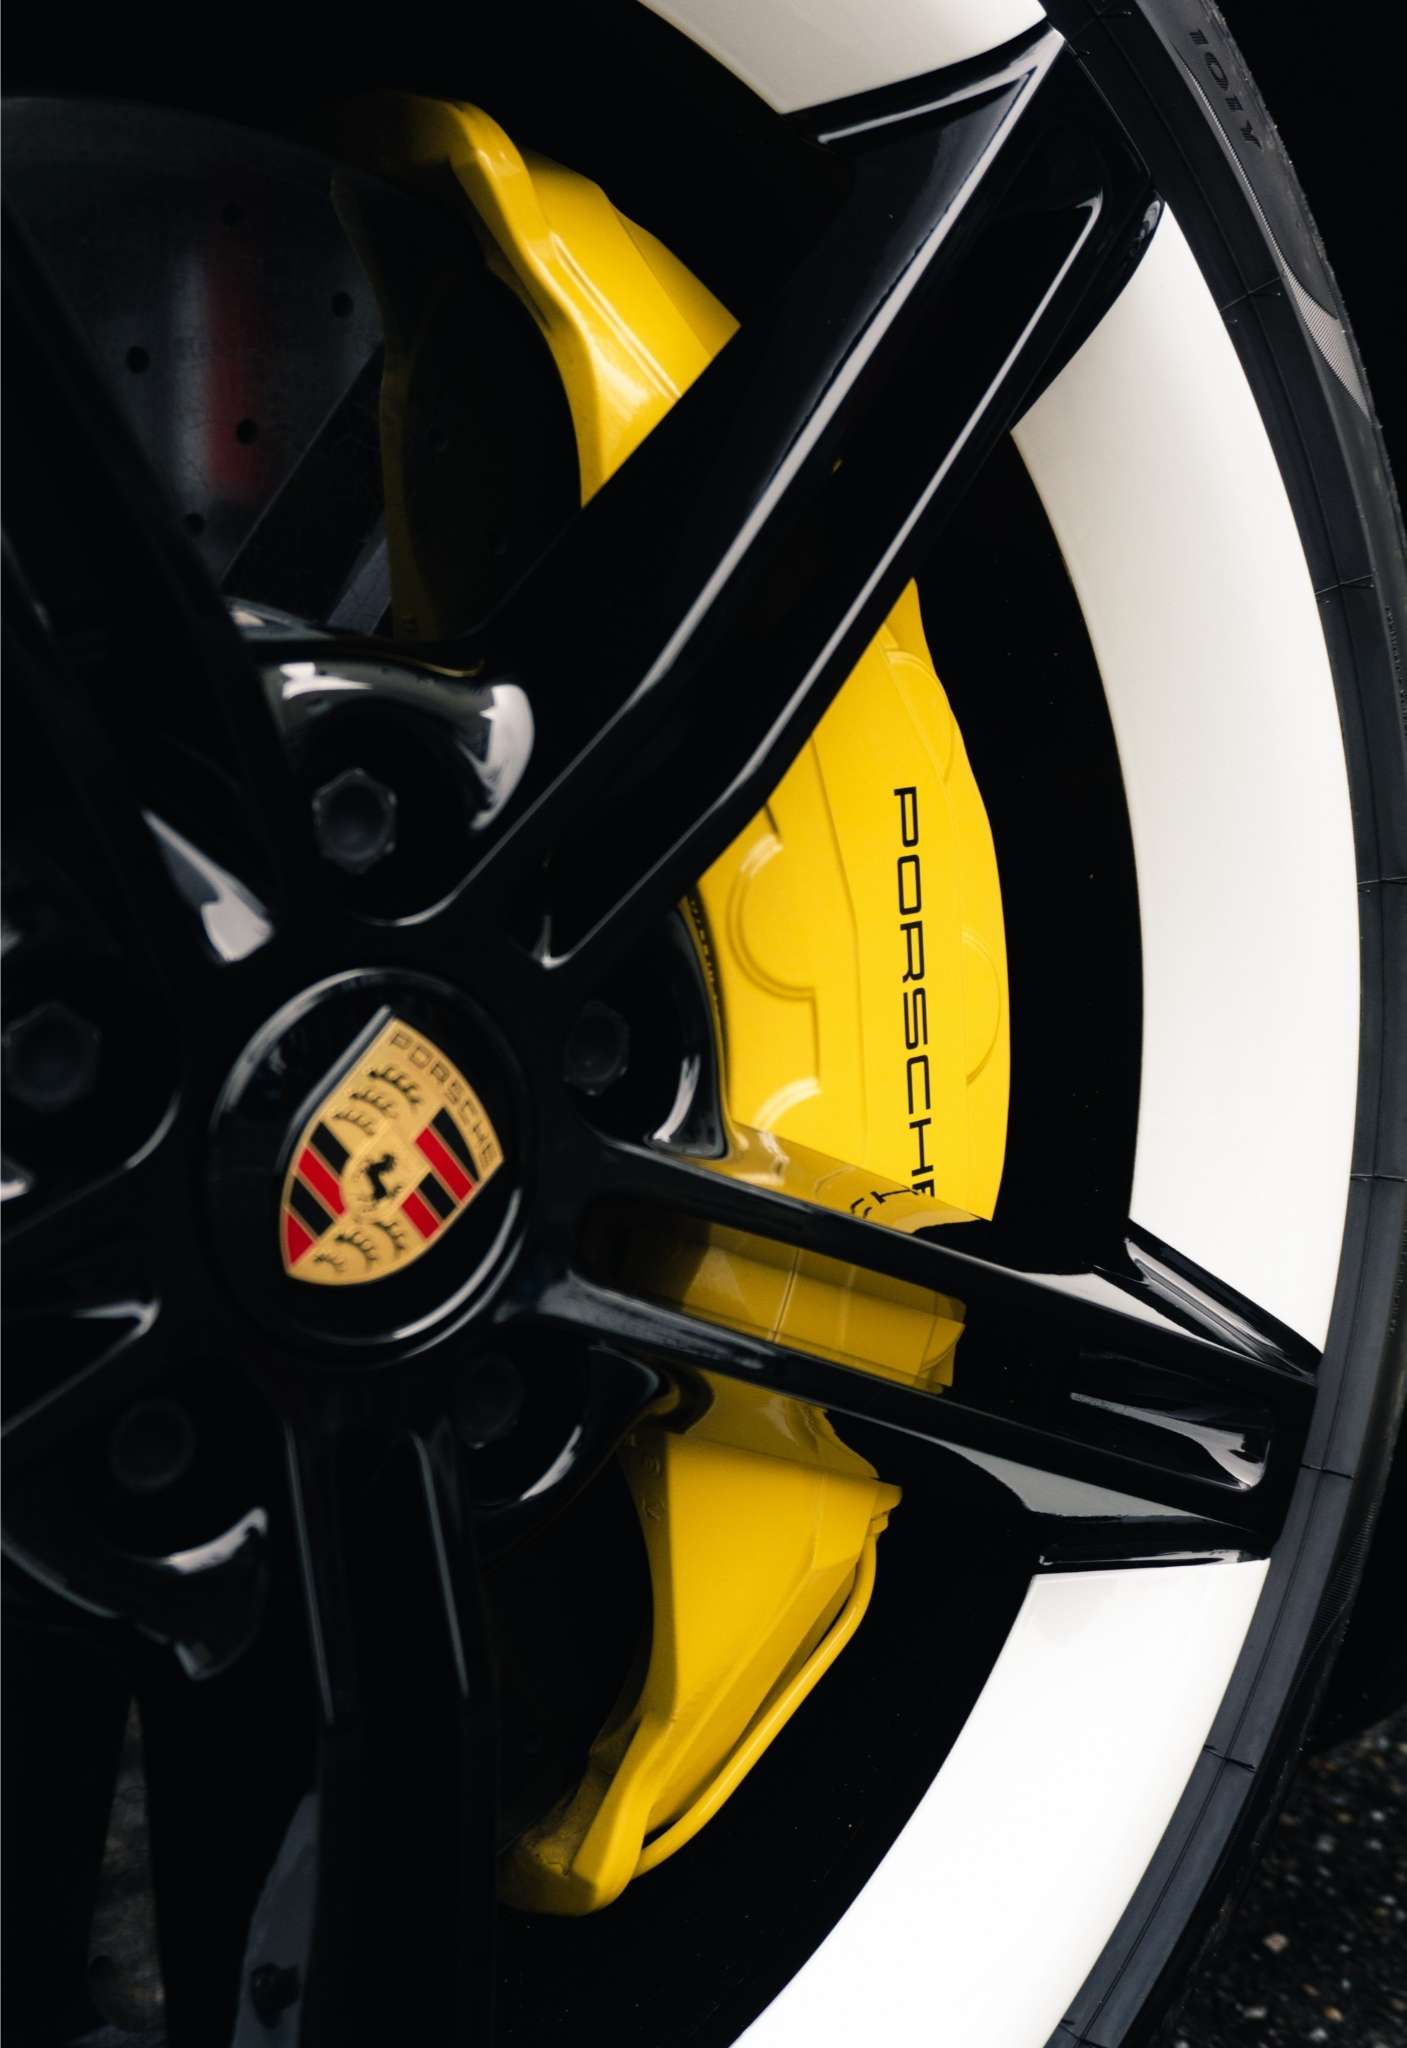 Porsche Yellow Rim Wheel Close-Up